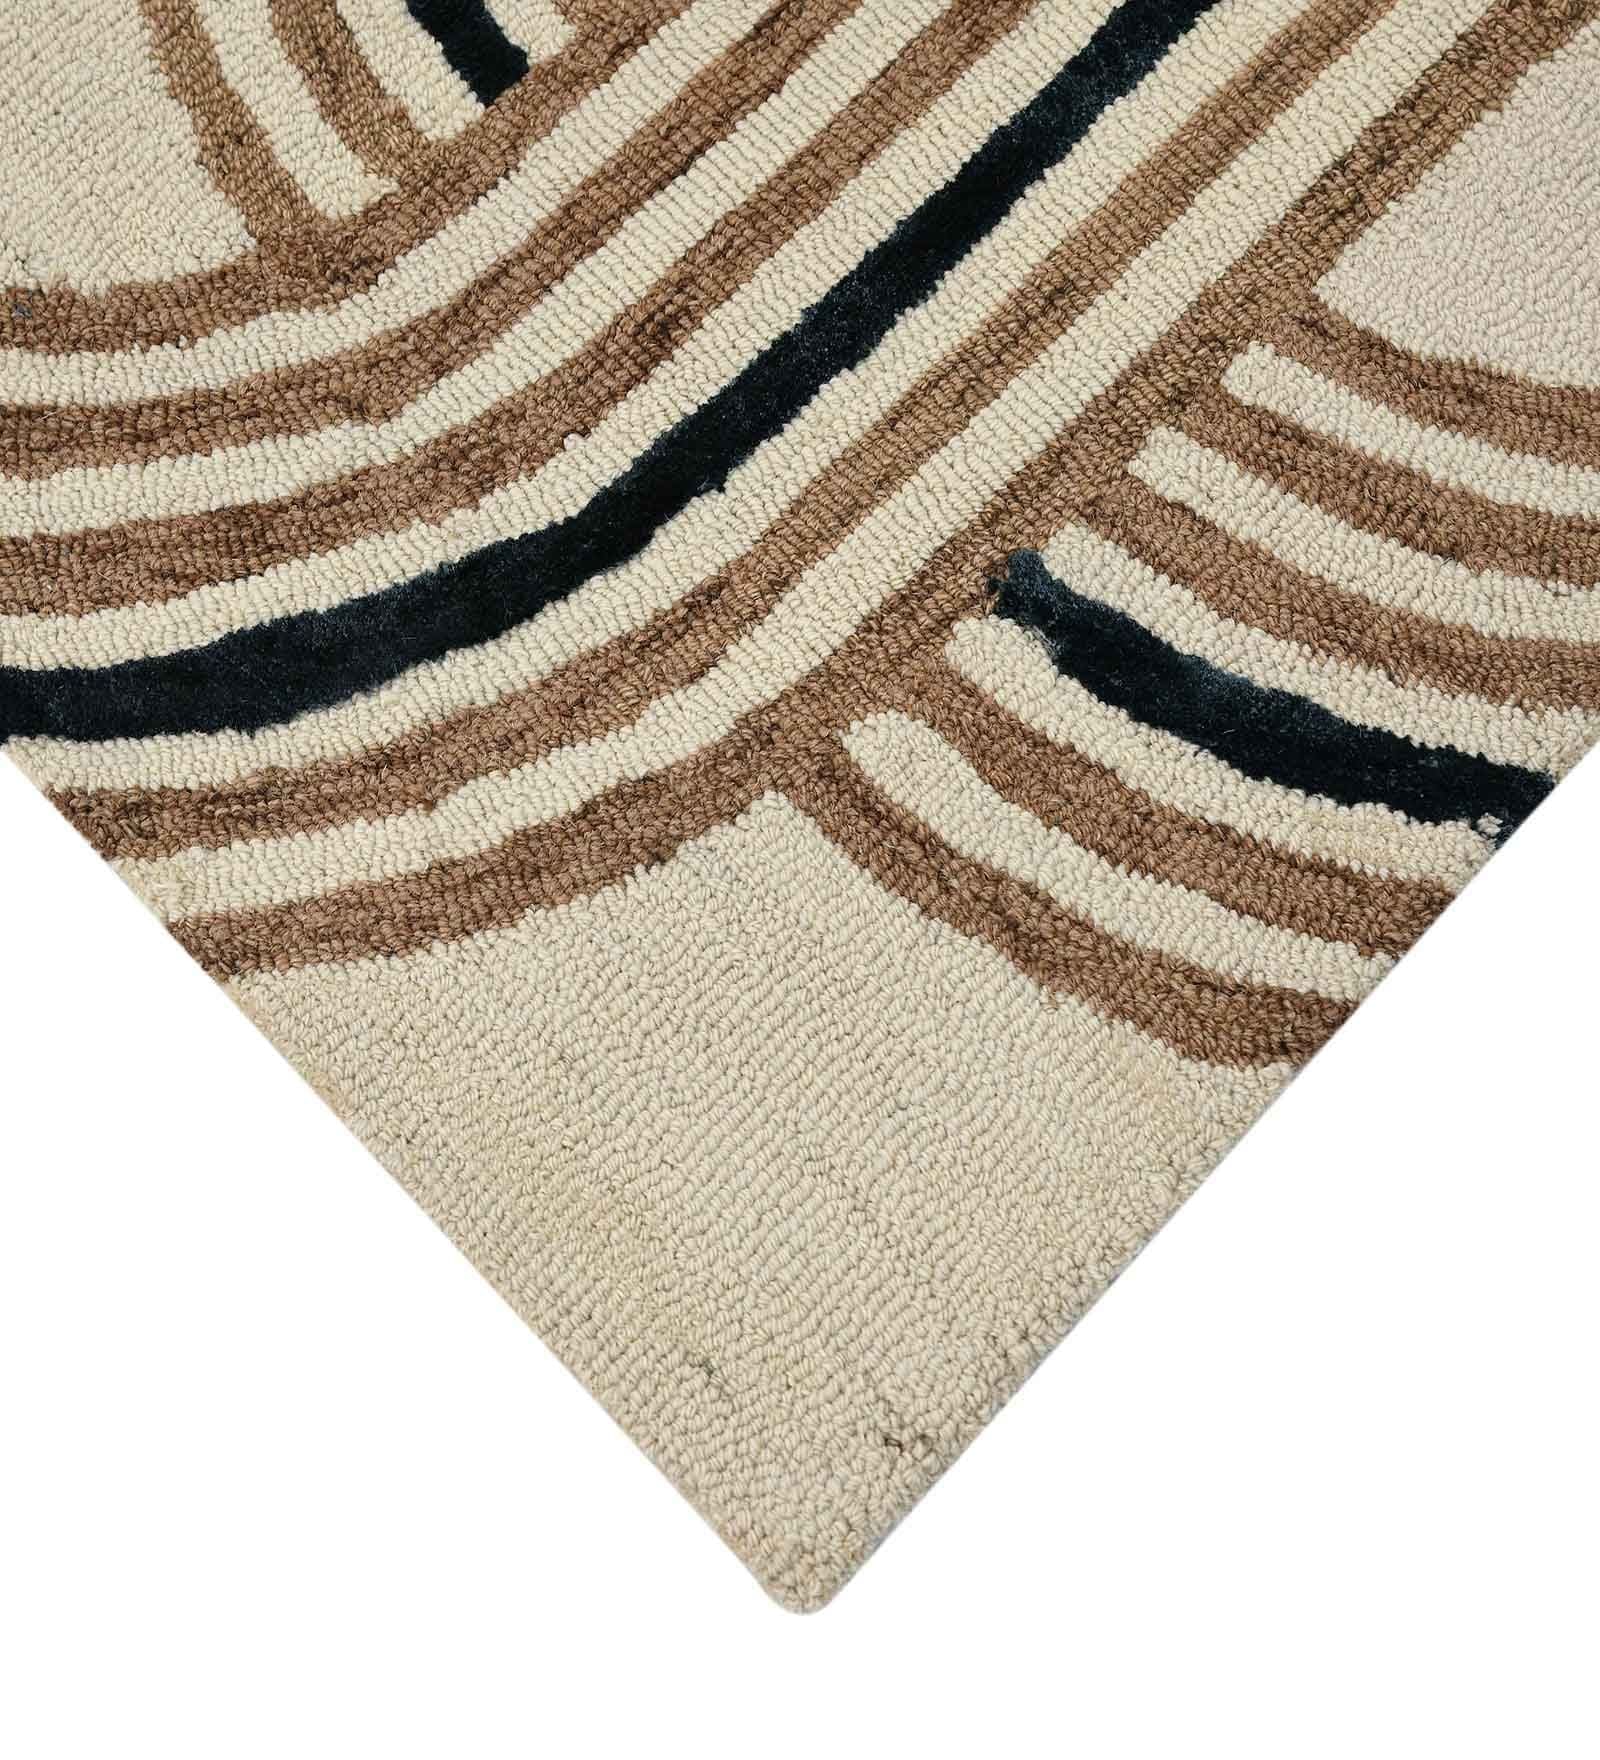 CORAL REEF Wool & Viscose Canyan 8x10 Feet  Hand-Tufted Carpet - Rug